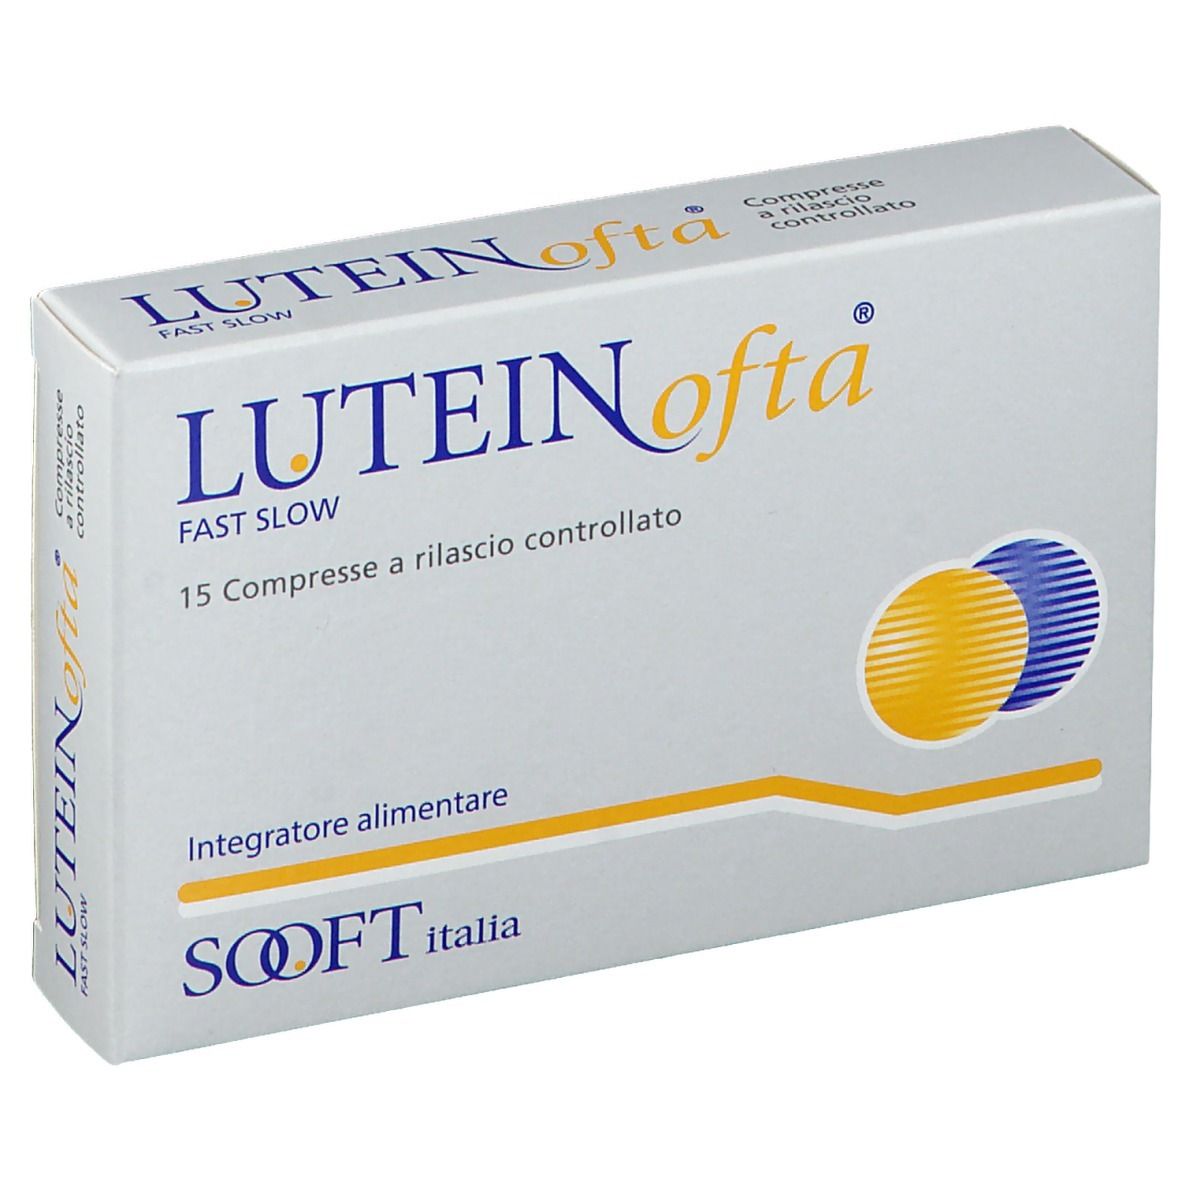 Luteinofta® Compresse